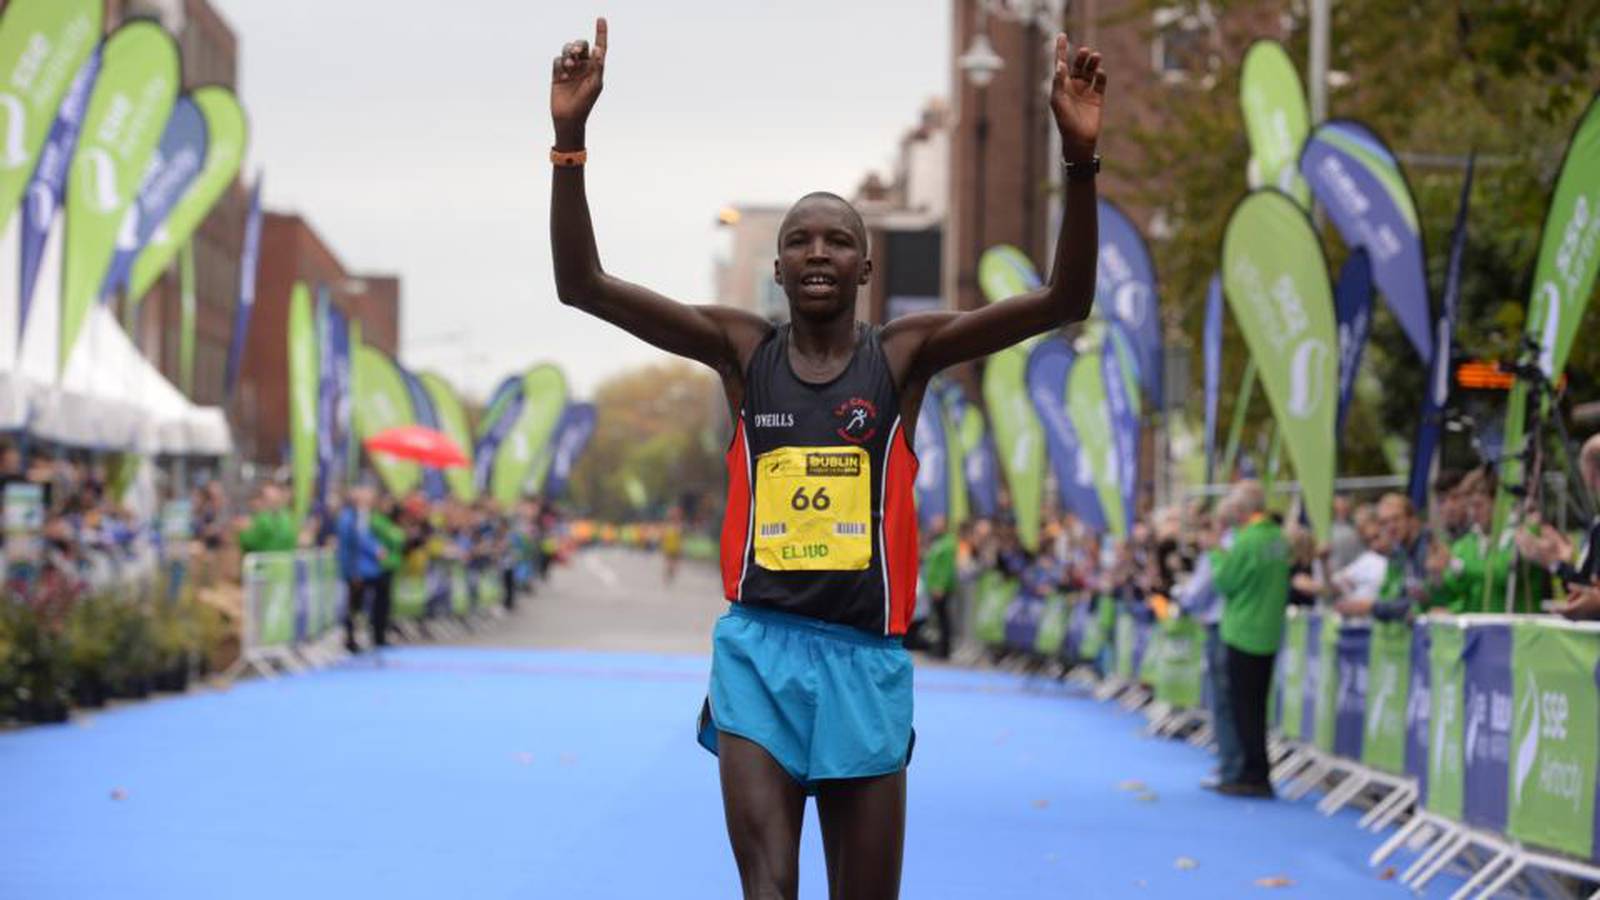 Dublin marathon: Kenyans triumph in race around captial – The Irish Times